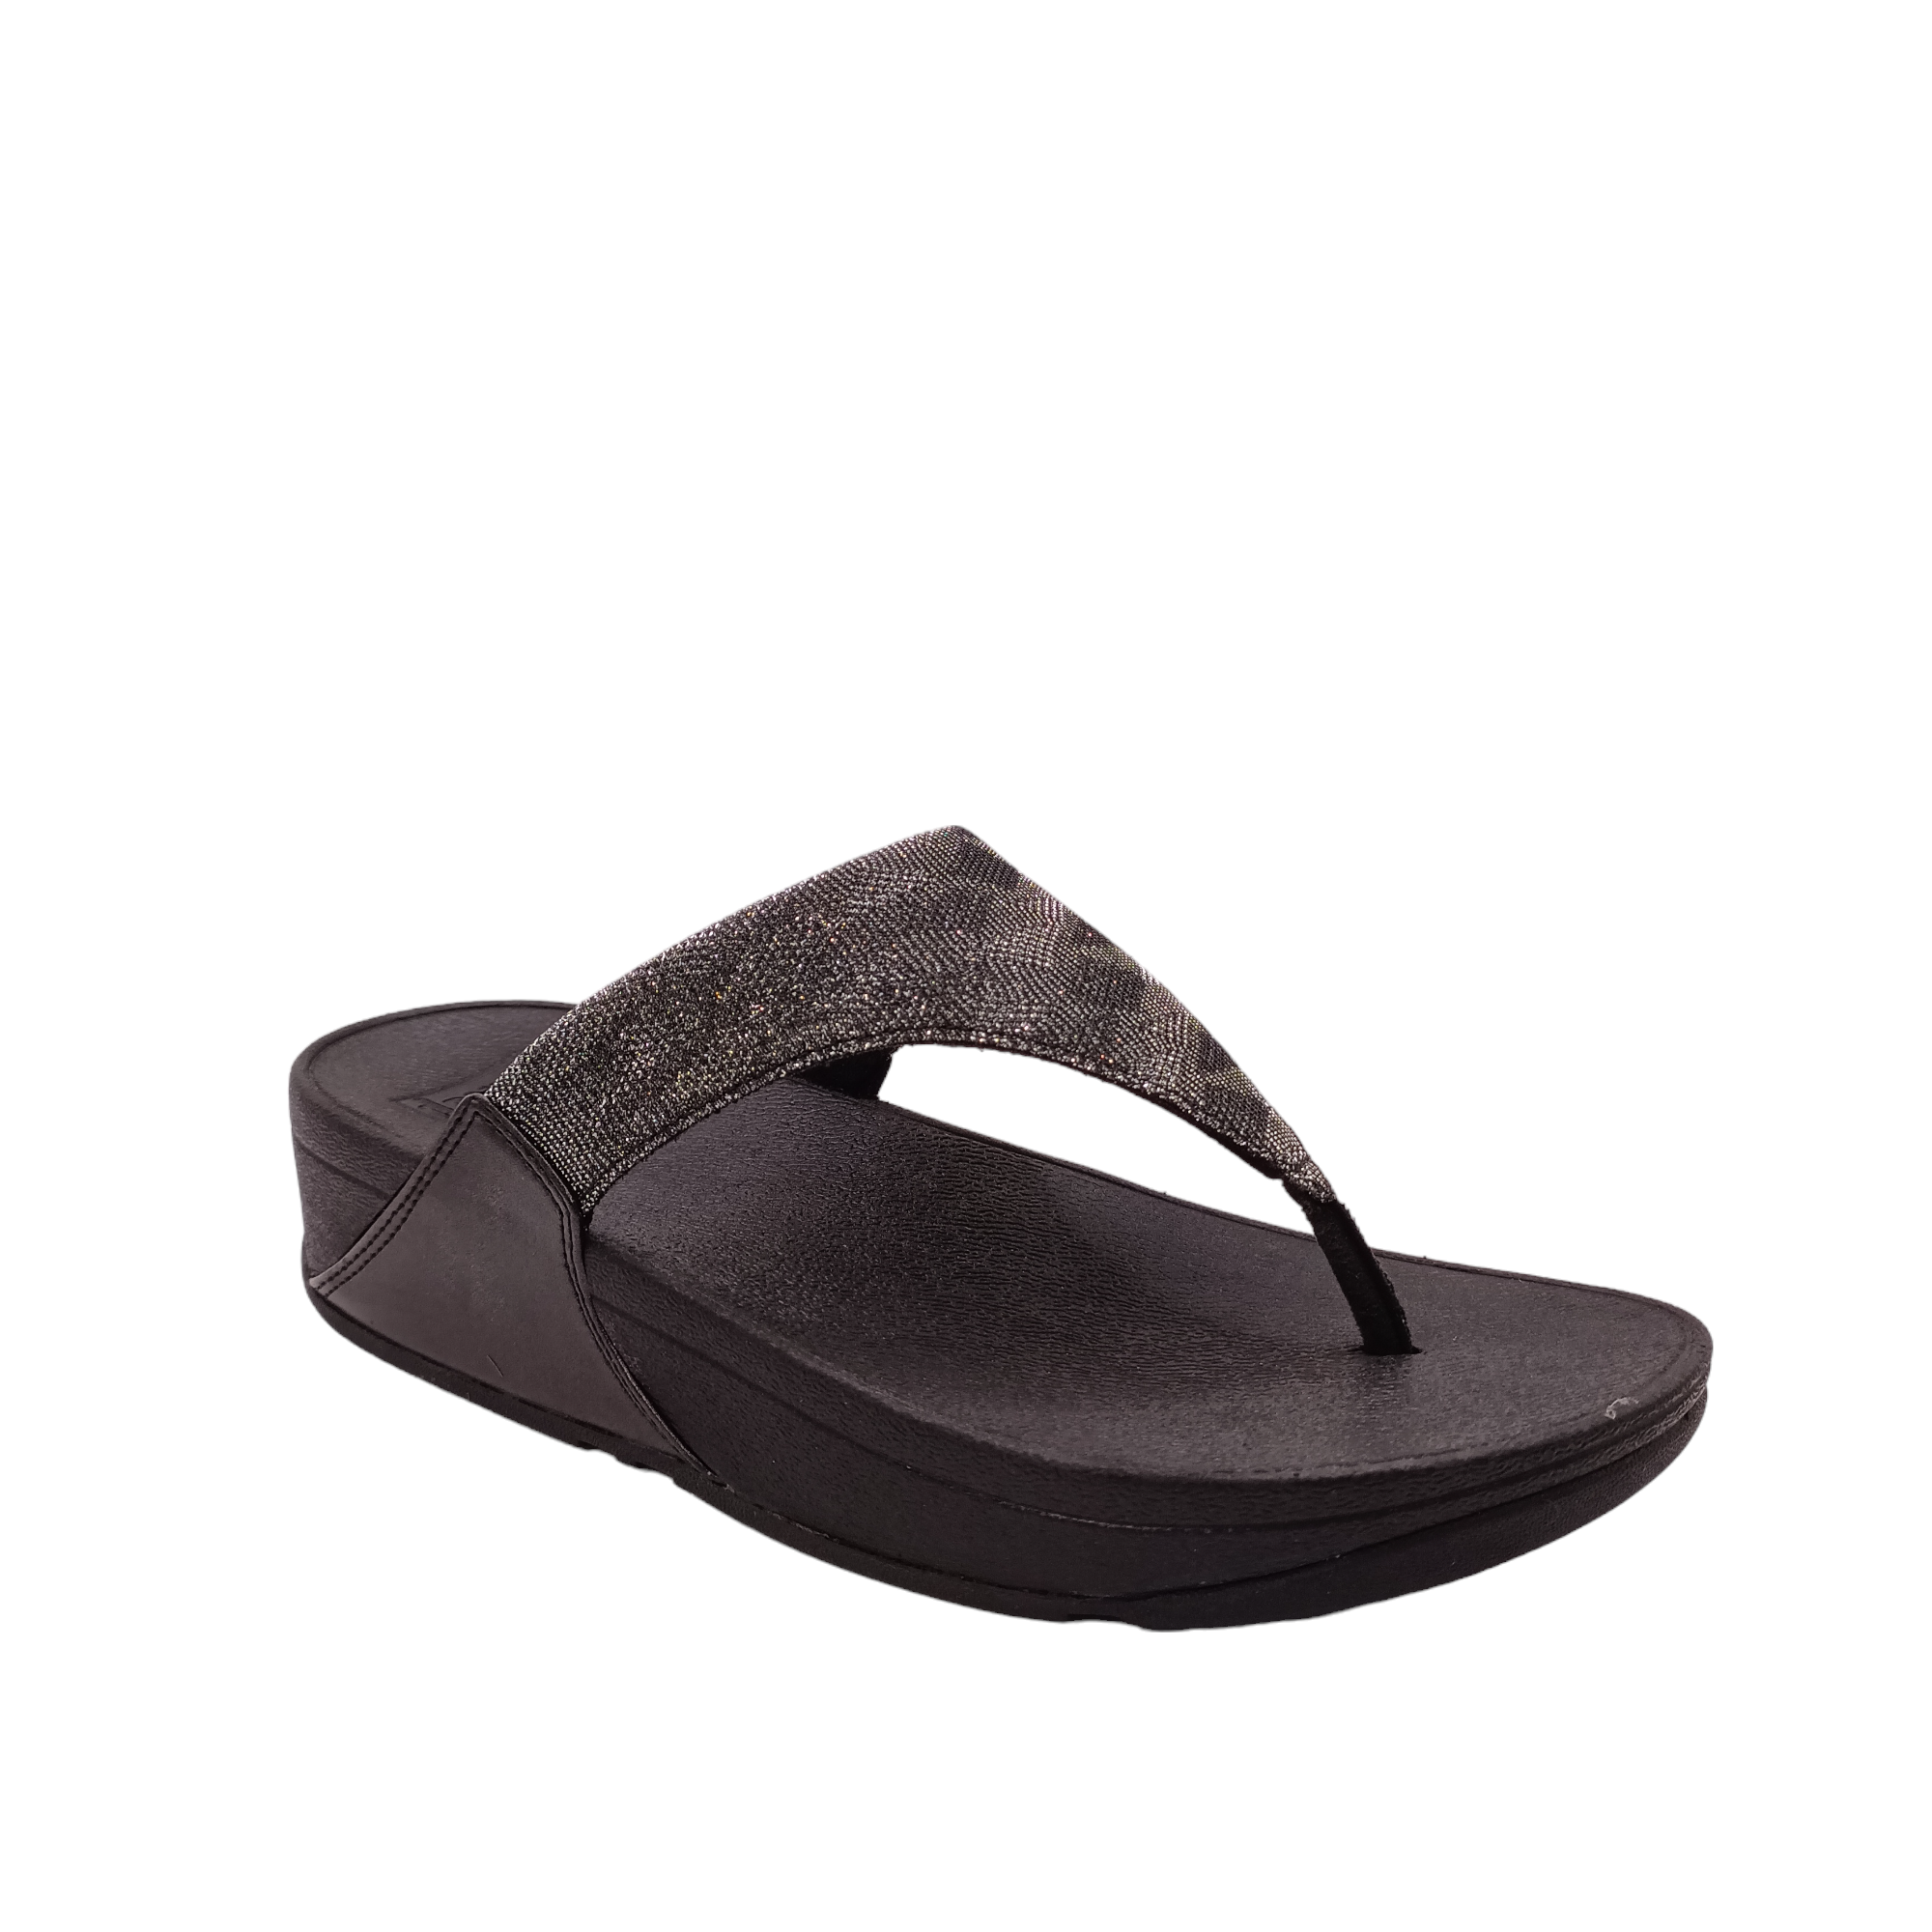 Lulu Glitz Toe-Post Sandal - shoe&me - fitflop - Jandal - Jandals, Platform, Summer, Womens